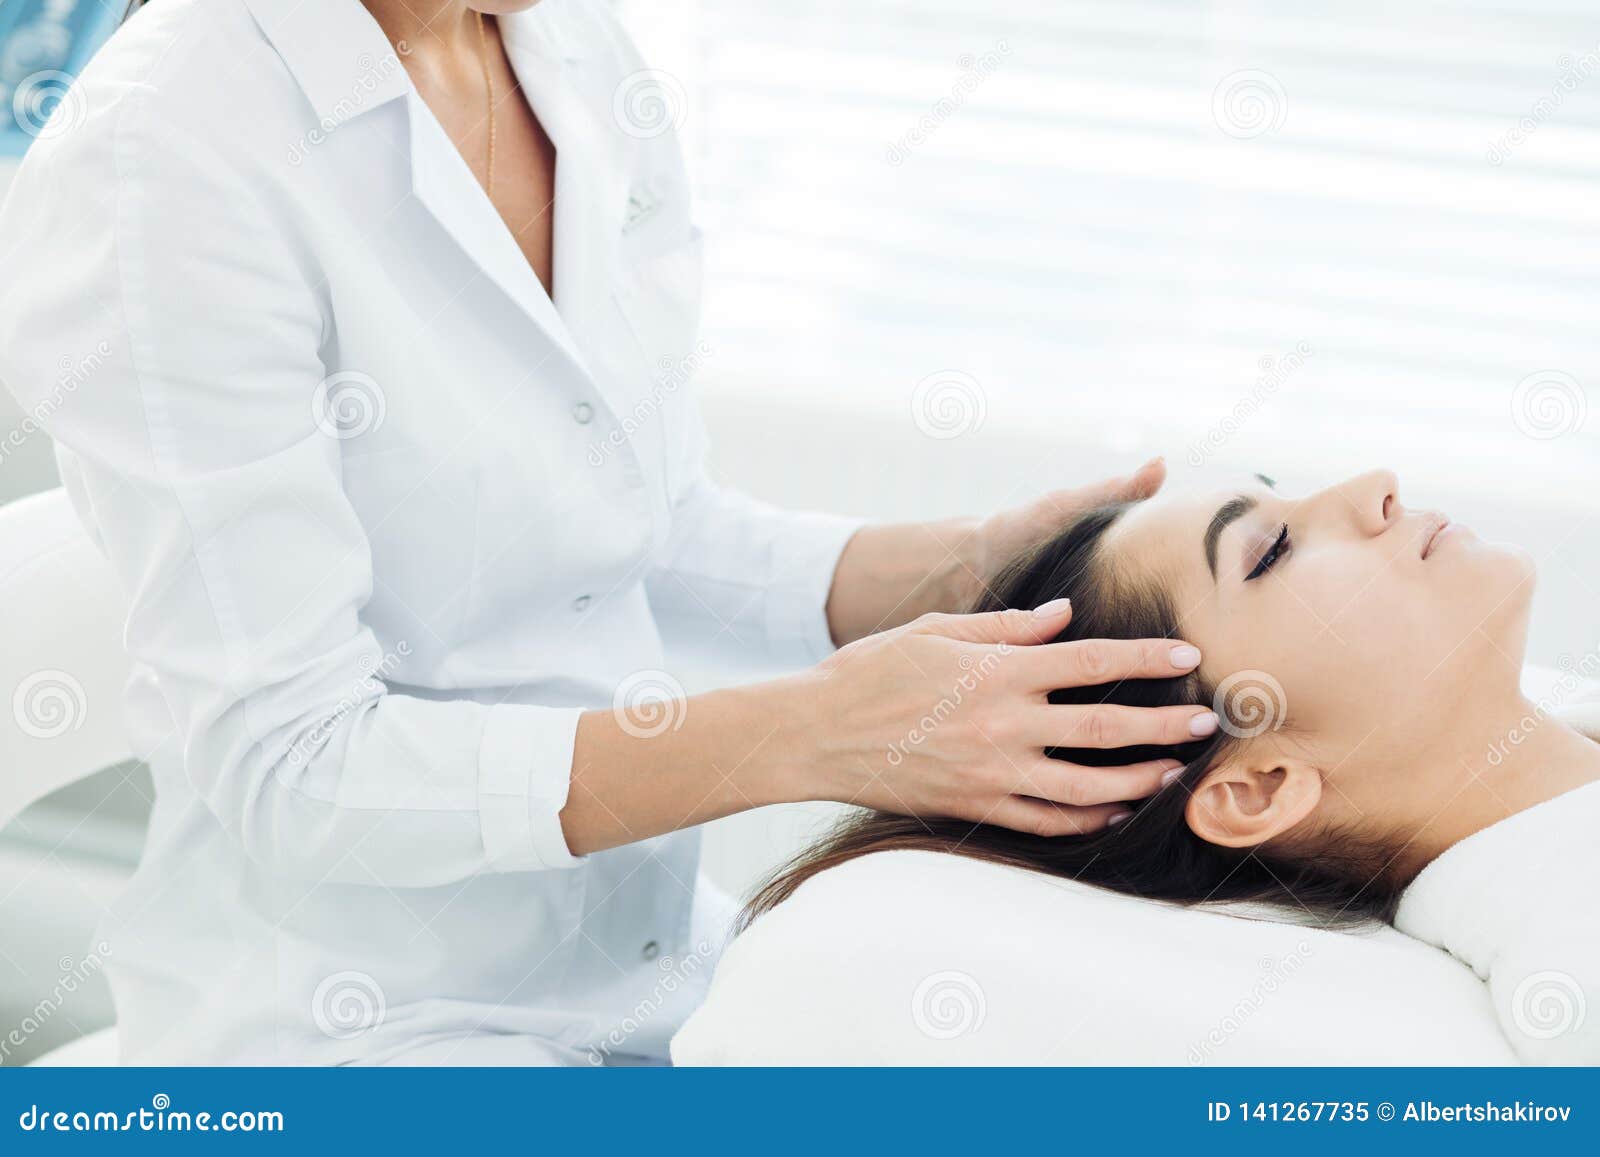 Pasion de mujer masaje 145156